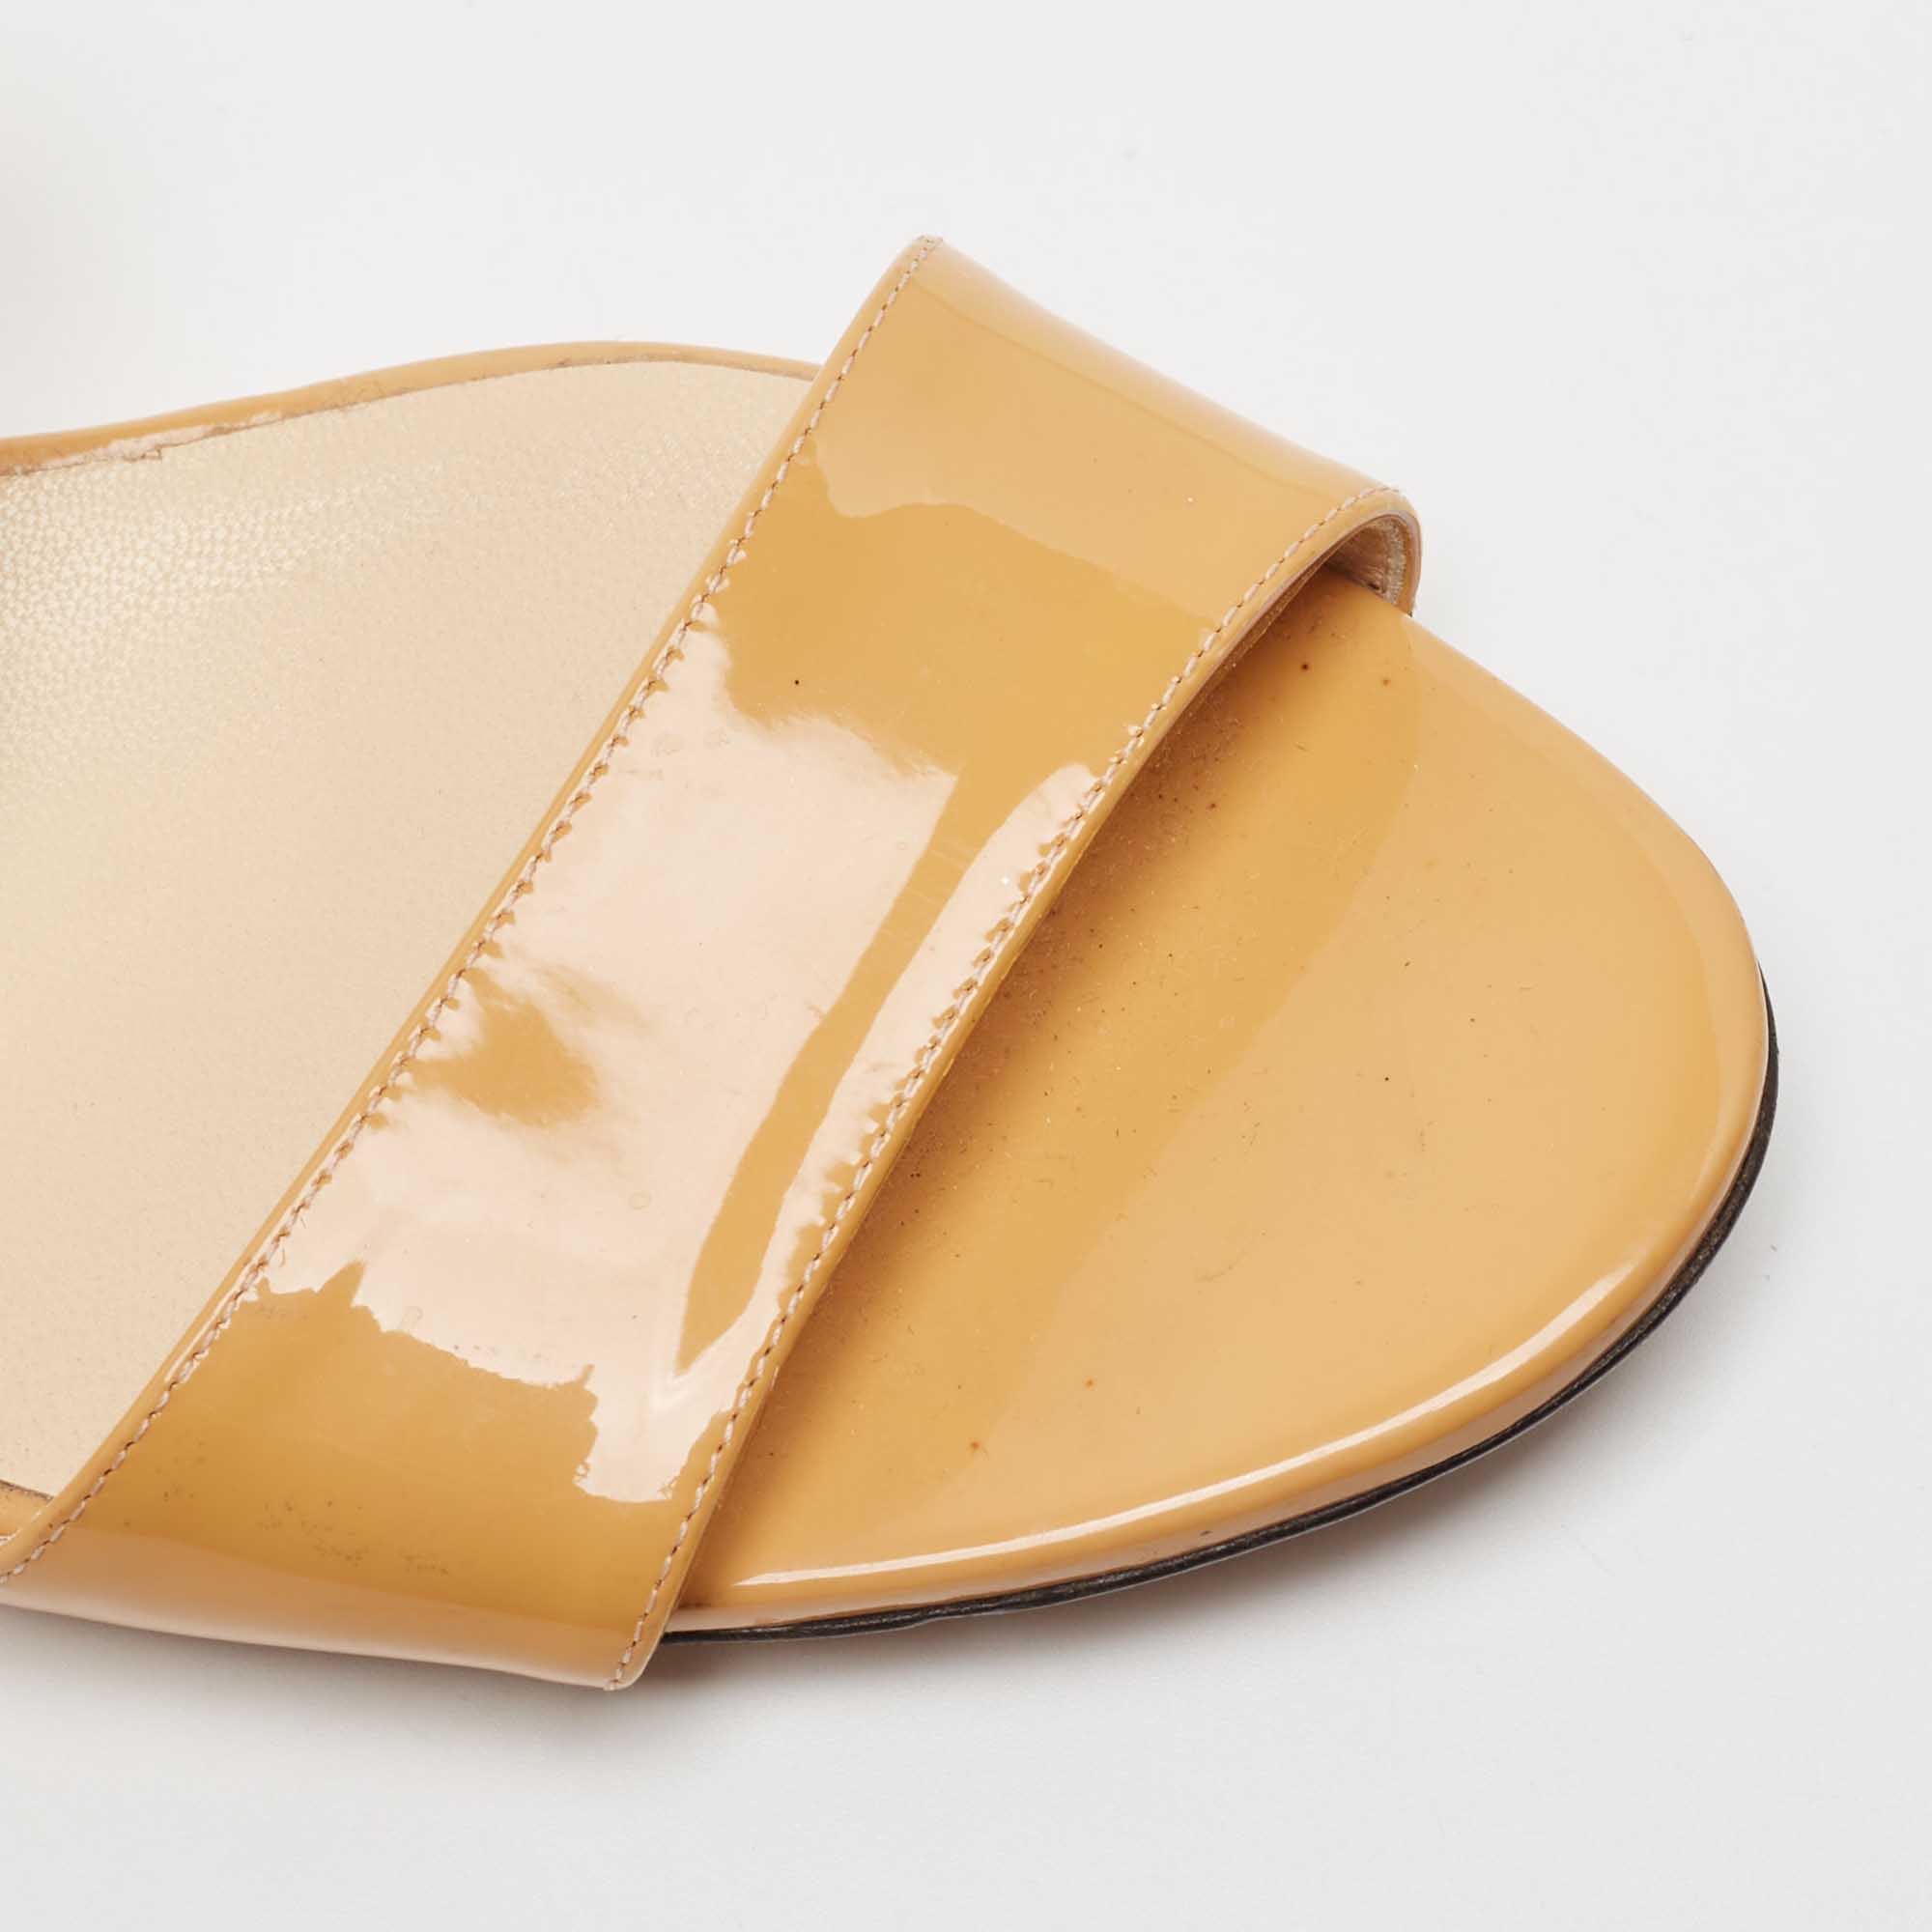 Jimmy Choo Light Orange Patent Leather Chiara Wedge Sandals Size 39